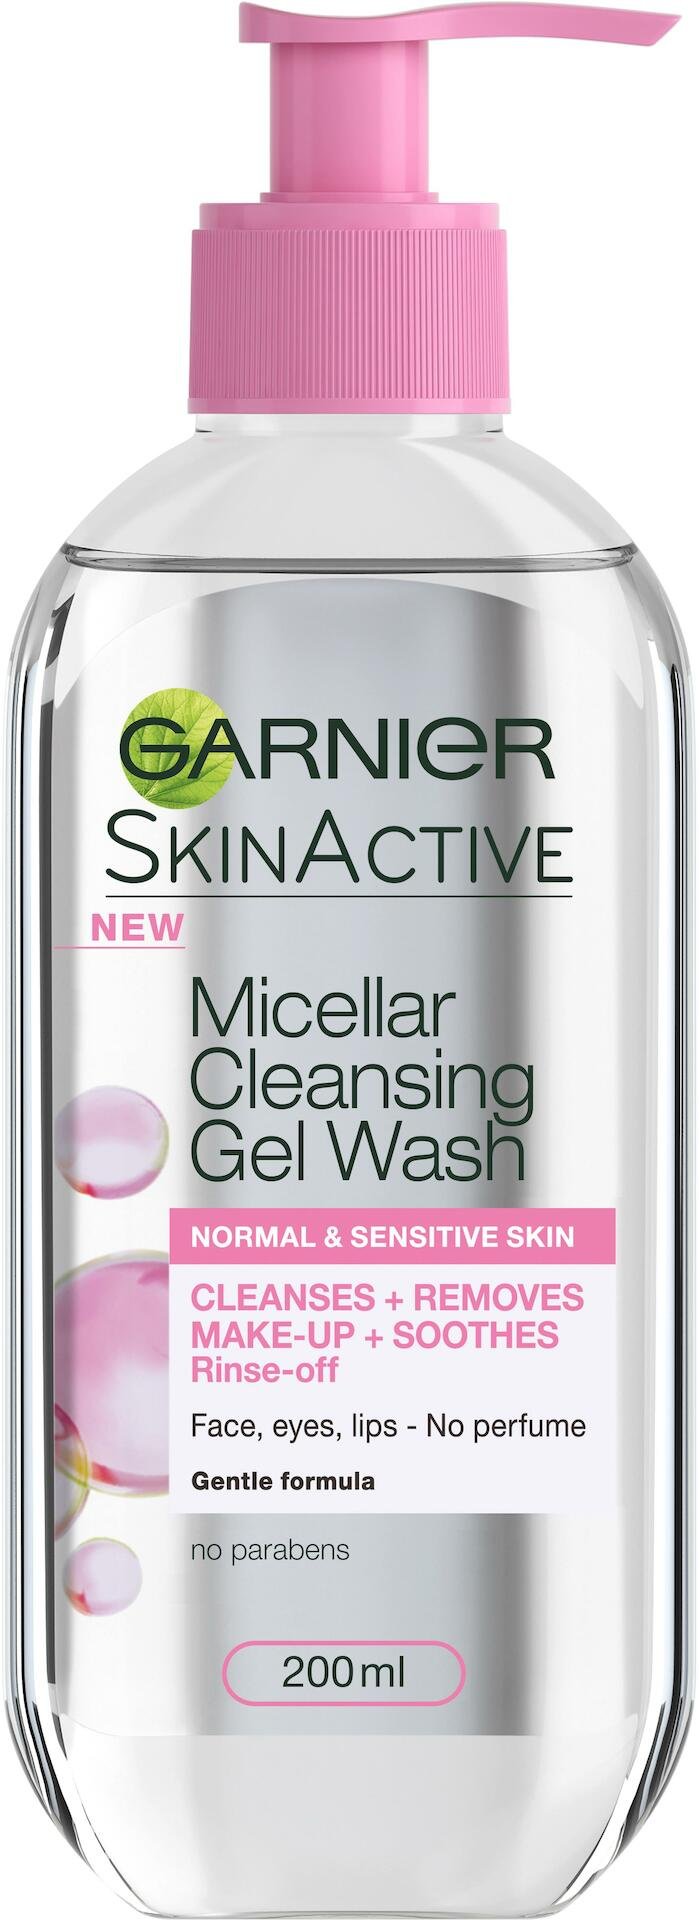 Garnier SkinActive Micellar Cleansing Gel Wash Normal & Sensitive skin 200 ml